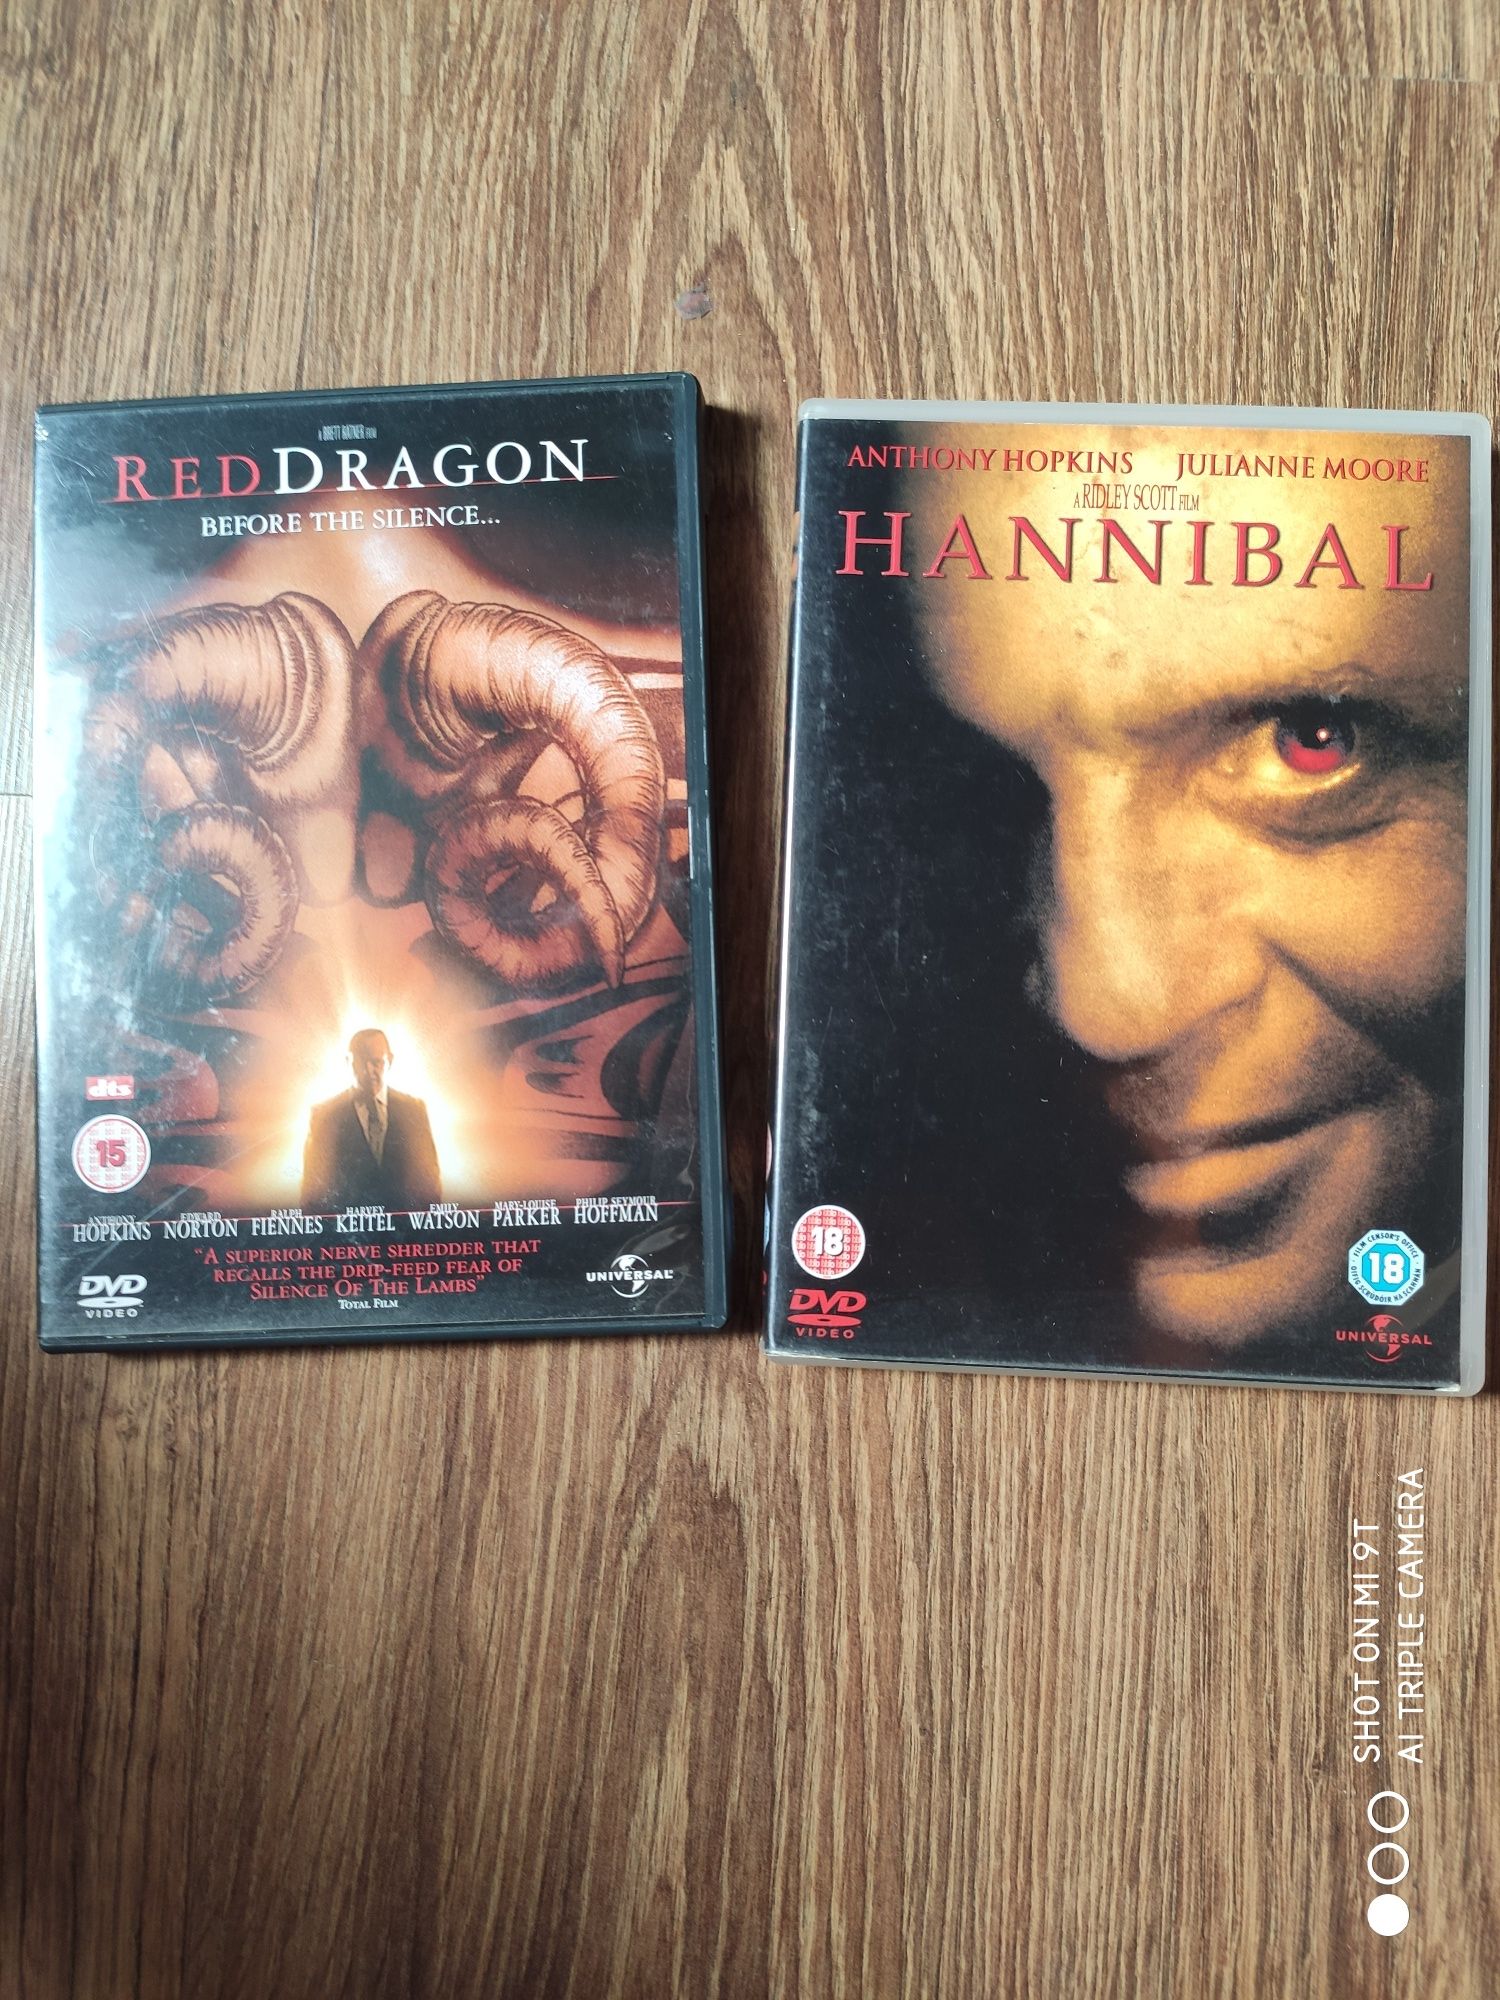 Zestaw filmów dvd - Hannibal i Red dragon